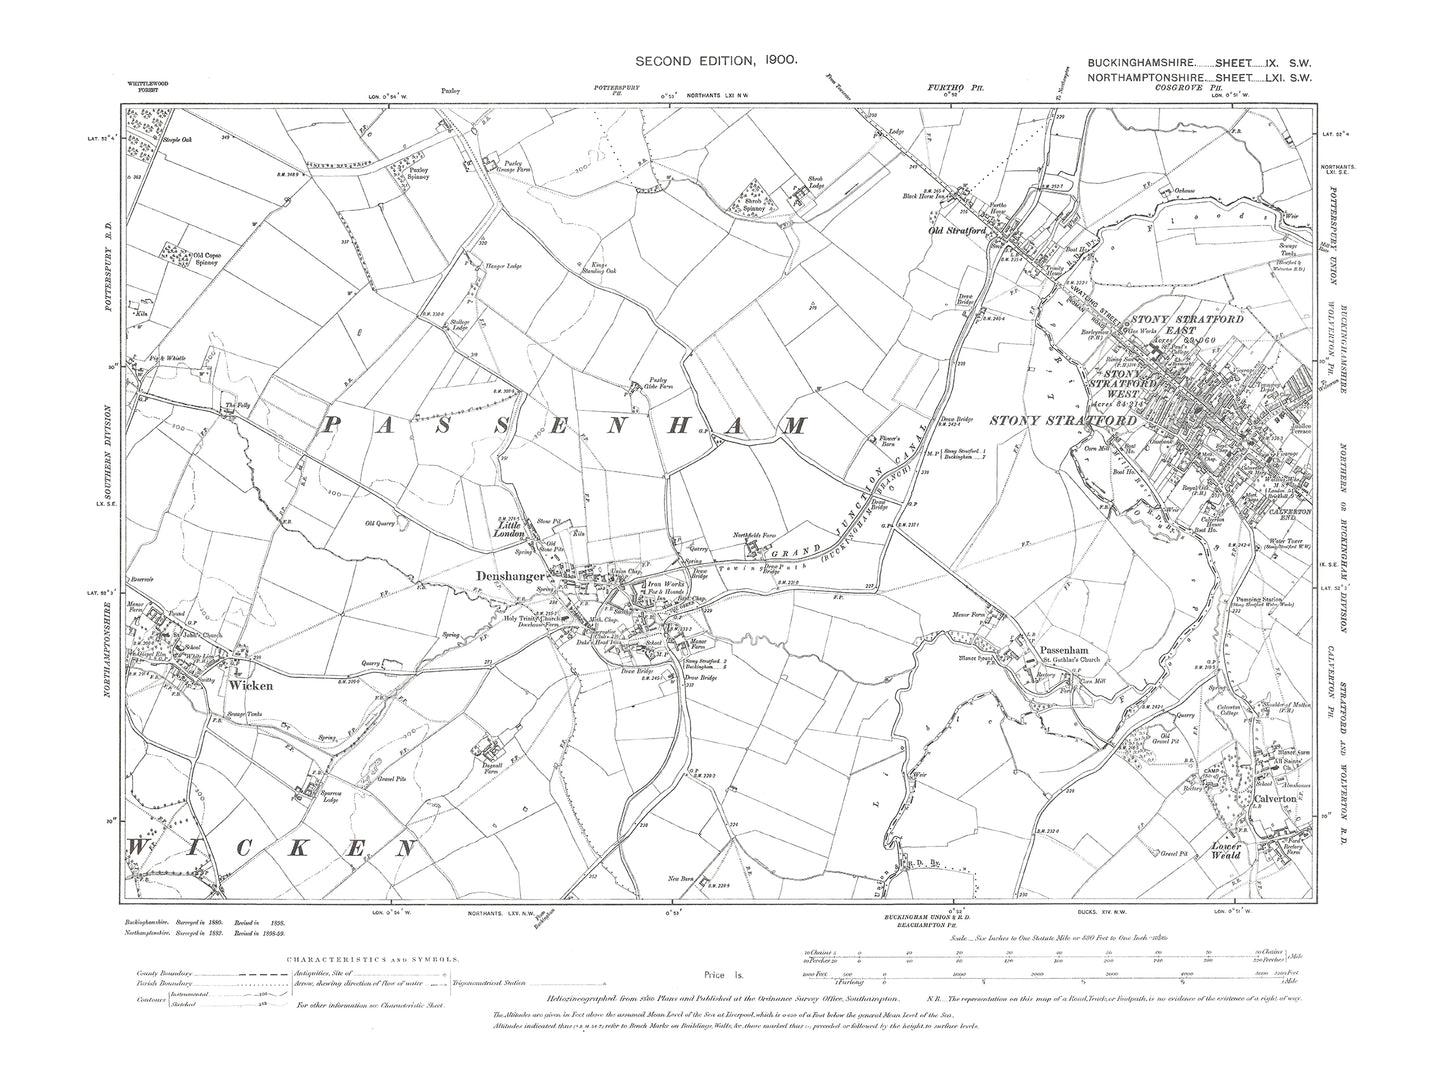 Old OS map dated 1900, showing Denshanger, Wicken, Passenham, Old Stratford in Buckinghamshire 9SW